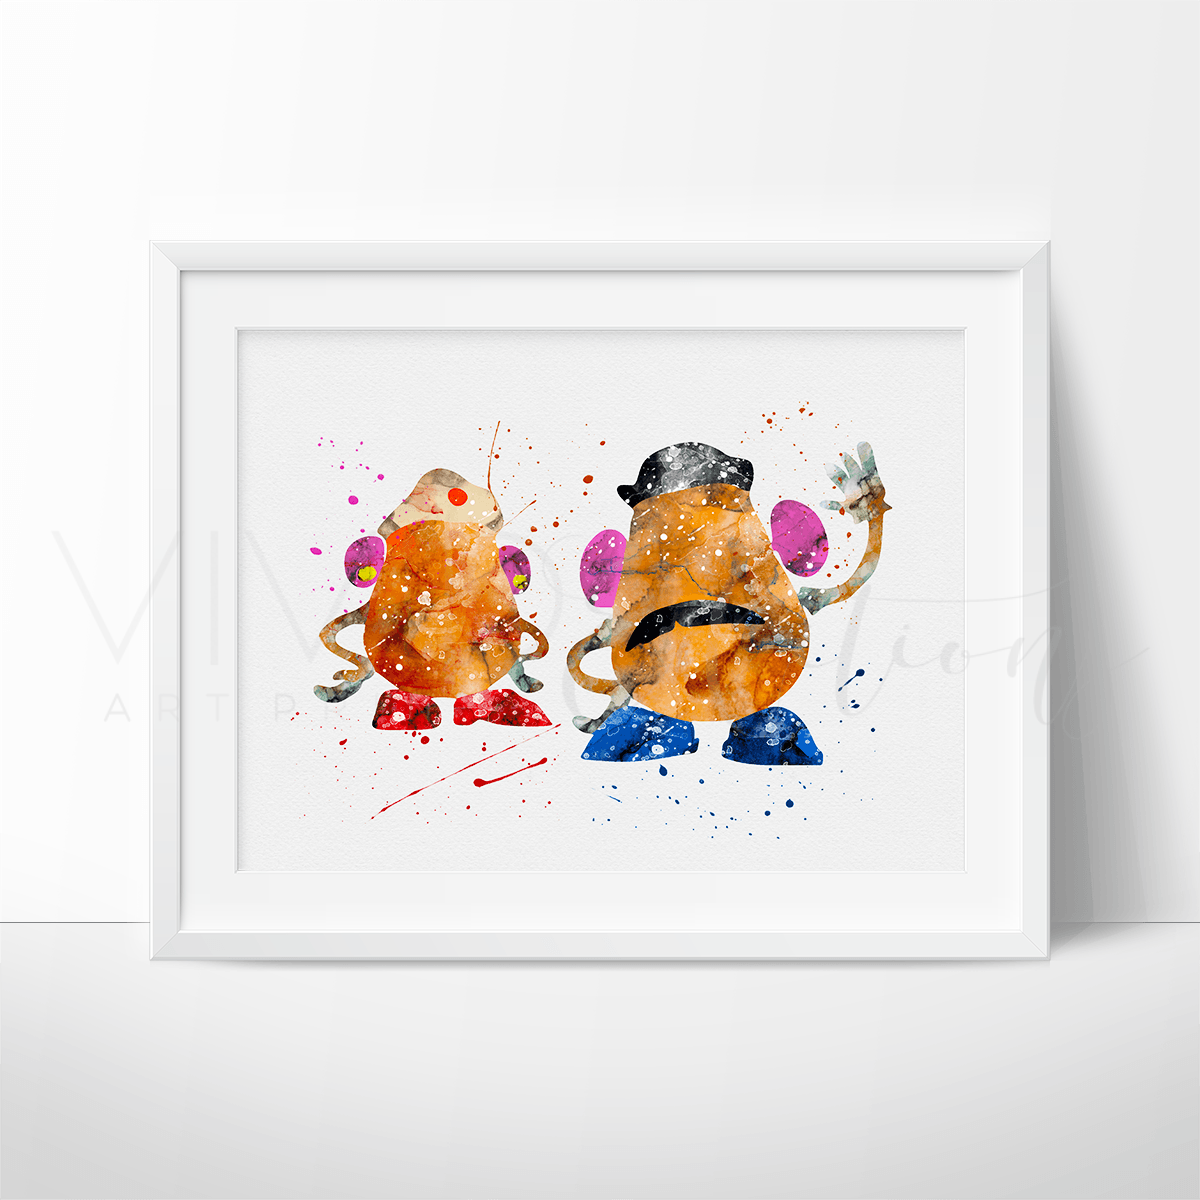 Mr. & Mrs. Potato Head Watercolor Art Print Print - VividEditions